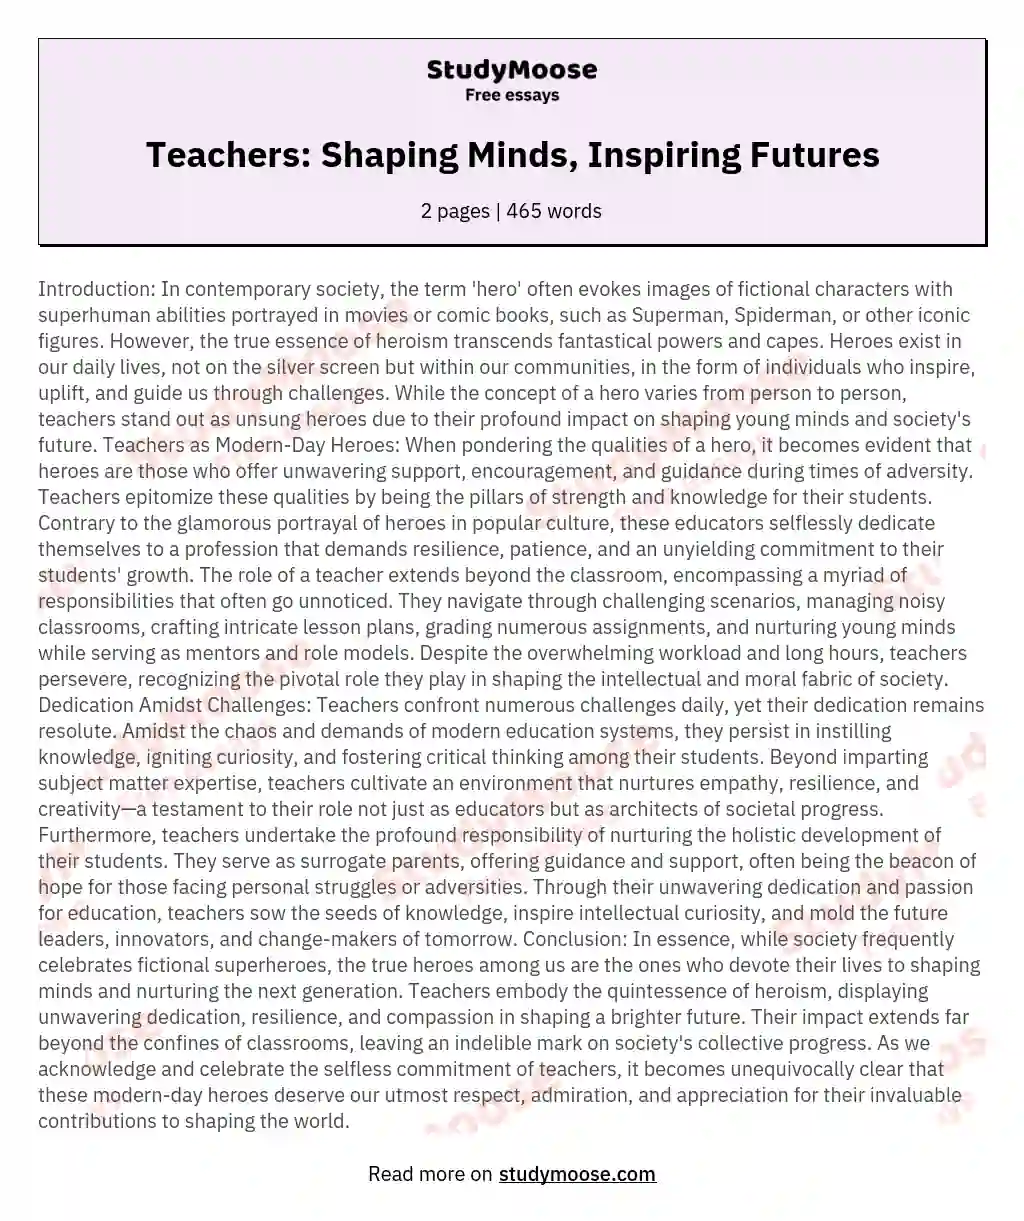 Teachers: Shaping Minds, Inspiring Futures essay